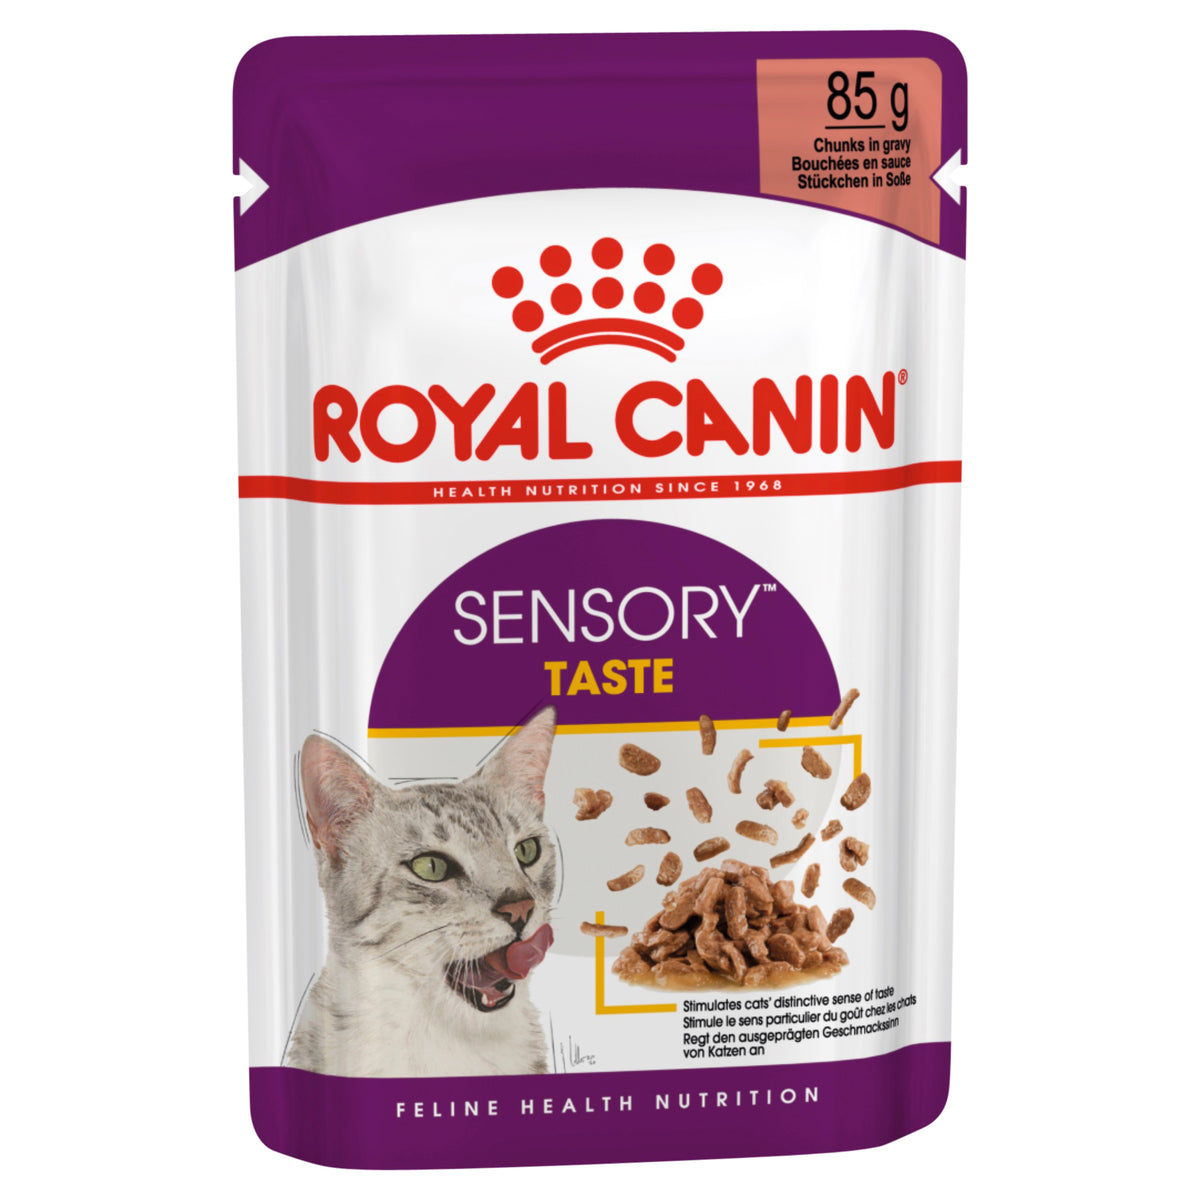 Royal Canin Sensory Taste Gravy Box 12x85g